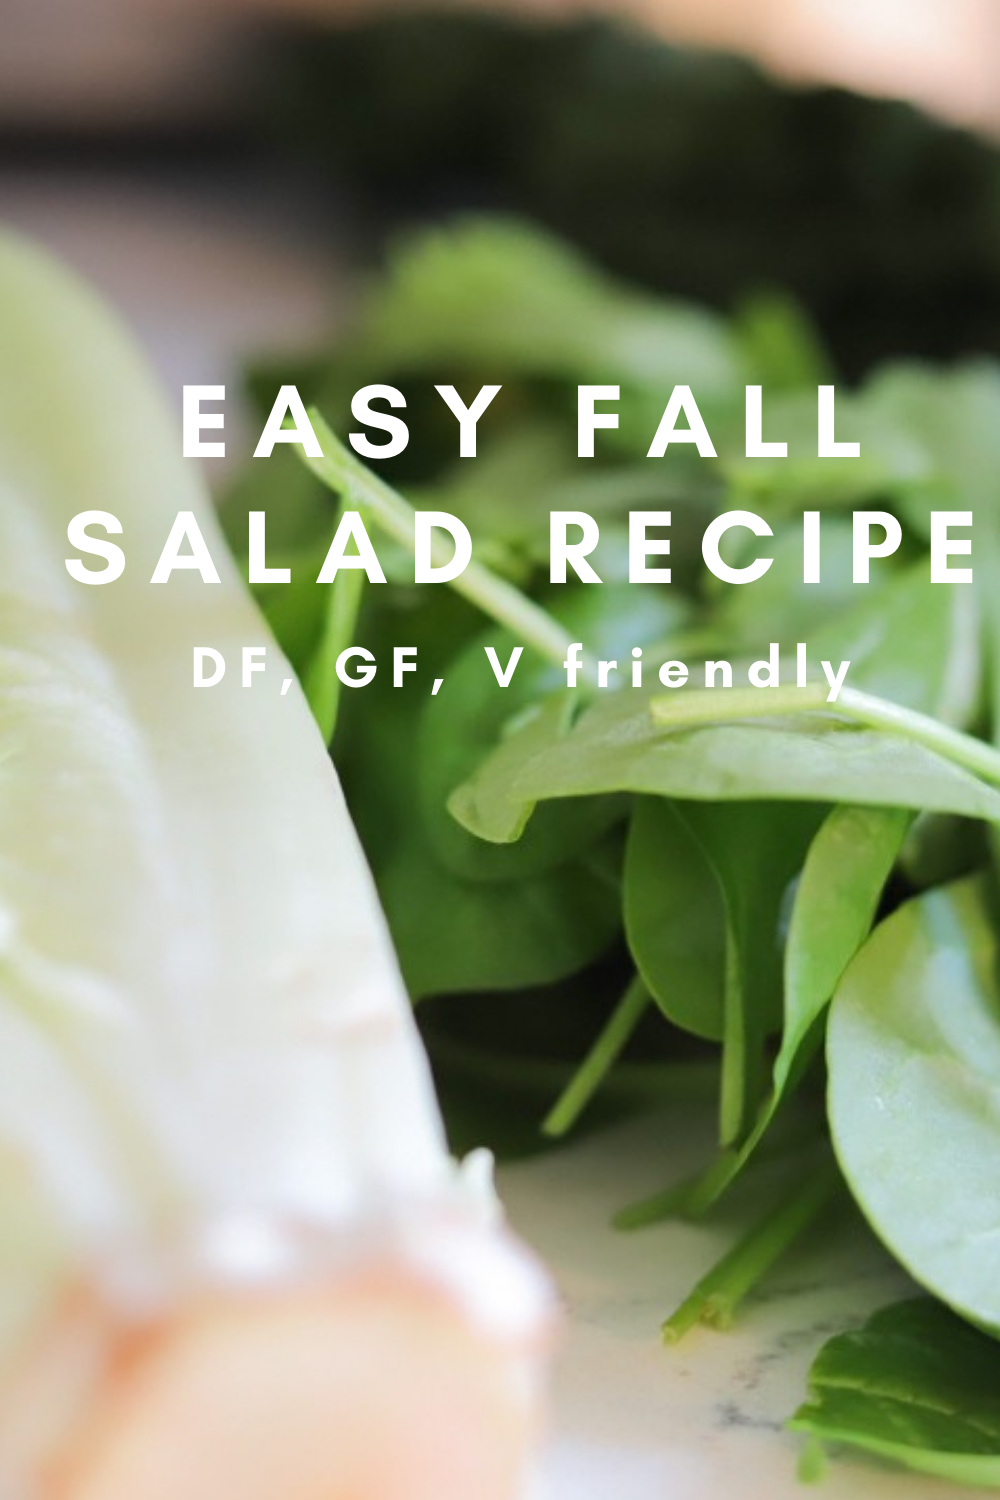 easy fall salad recipe, autumn salad recipe with apples, dairy-free, gluten-free, vegan friendly, vegetarian, dairy-free chicken apple salad, thanksgiving salad ideas, lments of style, la blogger, los angeles